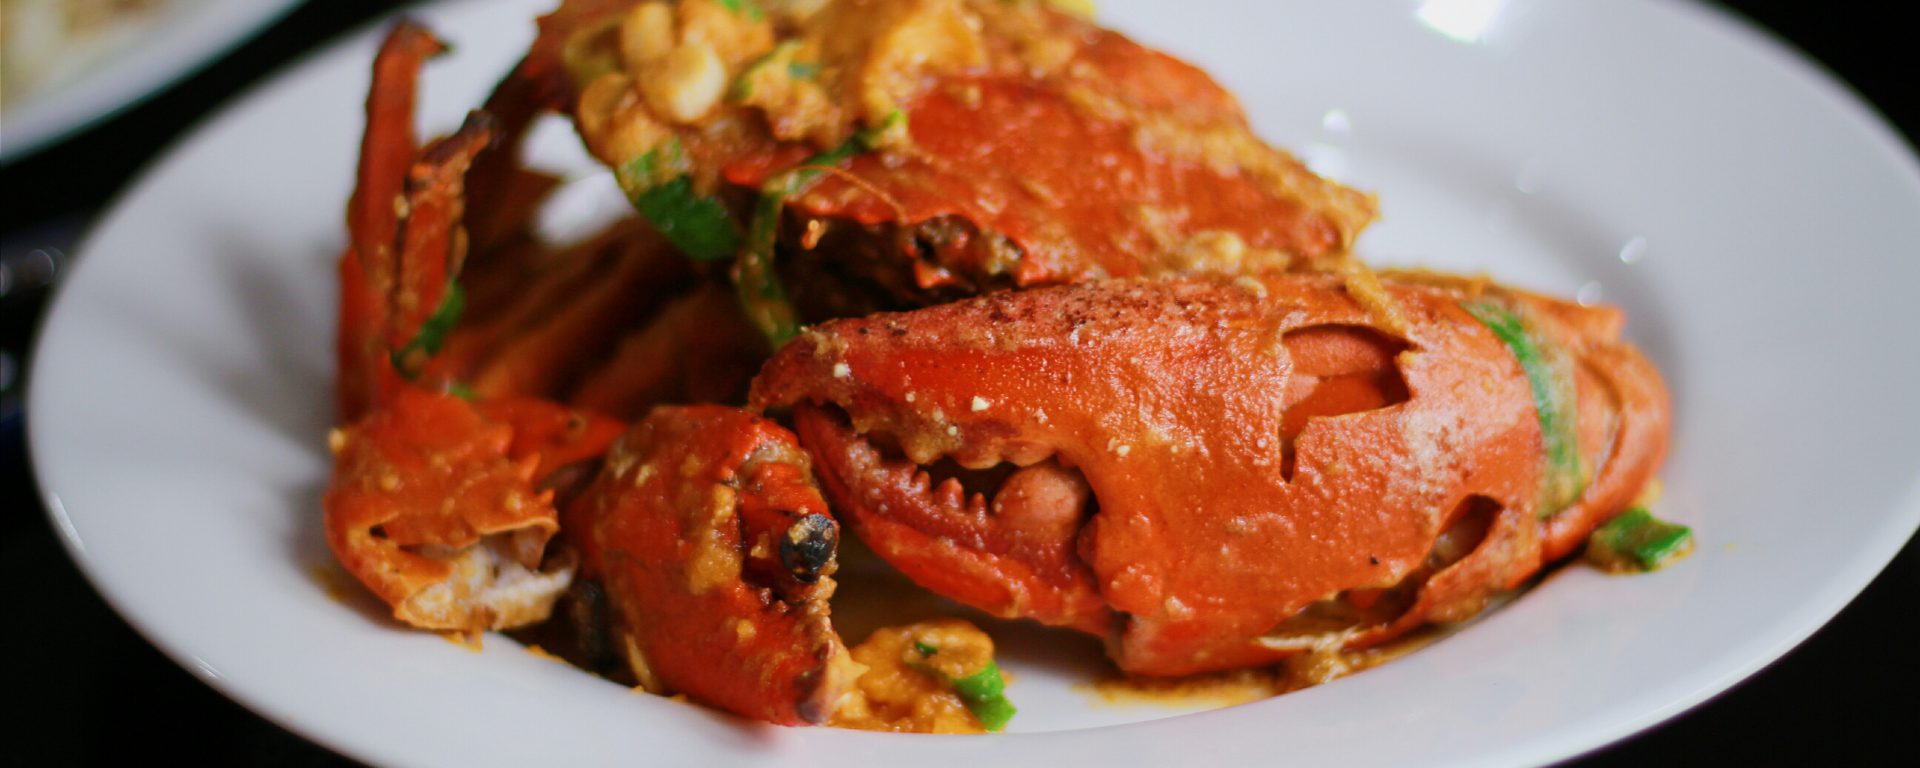 Grand Kuring Seafood Restaurant Puri Indah Jakarta Barat